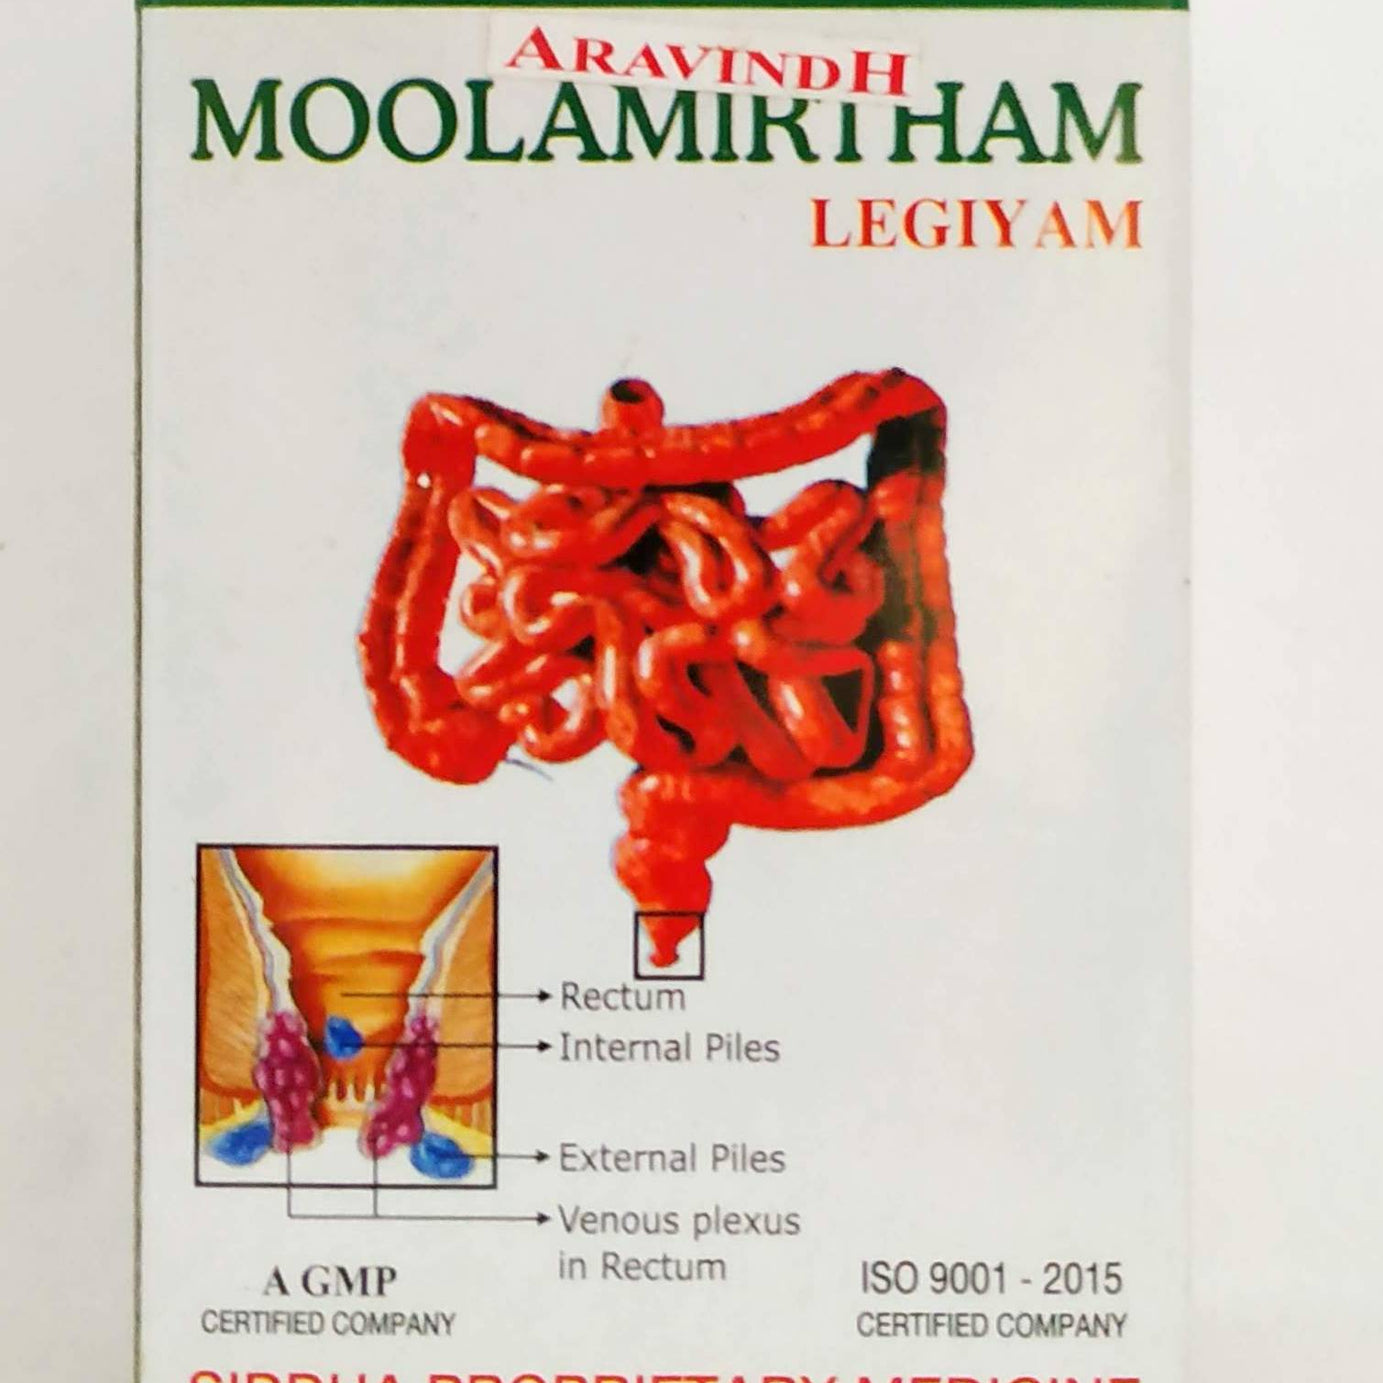 Shop Moolamritham Lehyam 250gm at price 155.00 from Aravindh Online - Ayush Care